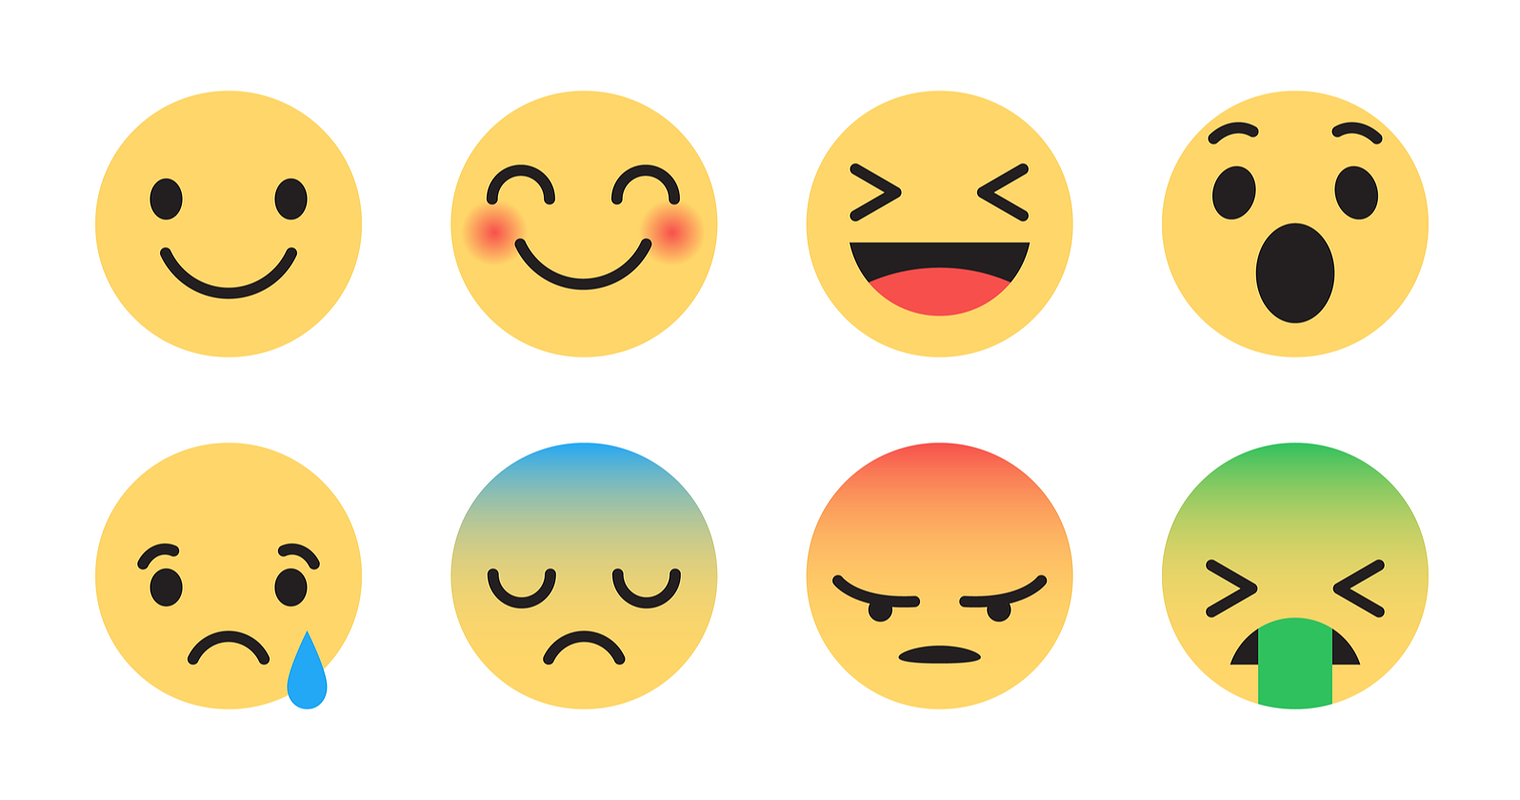 How to Add Emojis to Title Tags & Meta Descriptions in WordPress